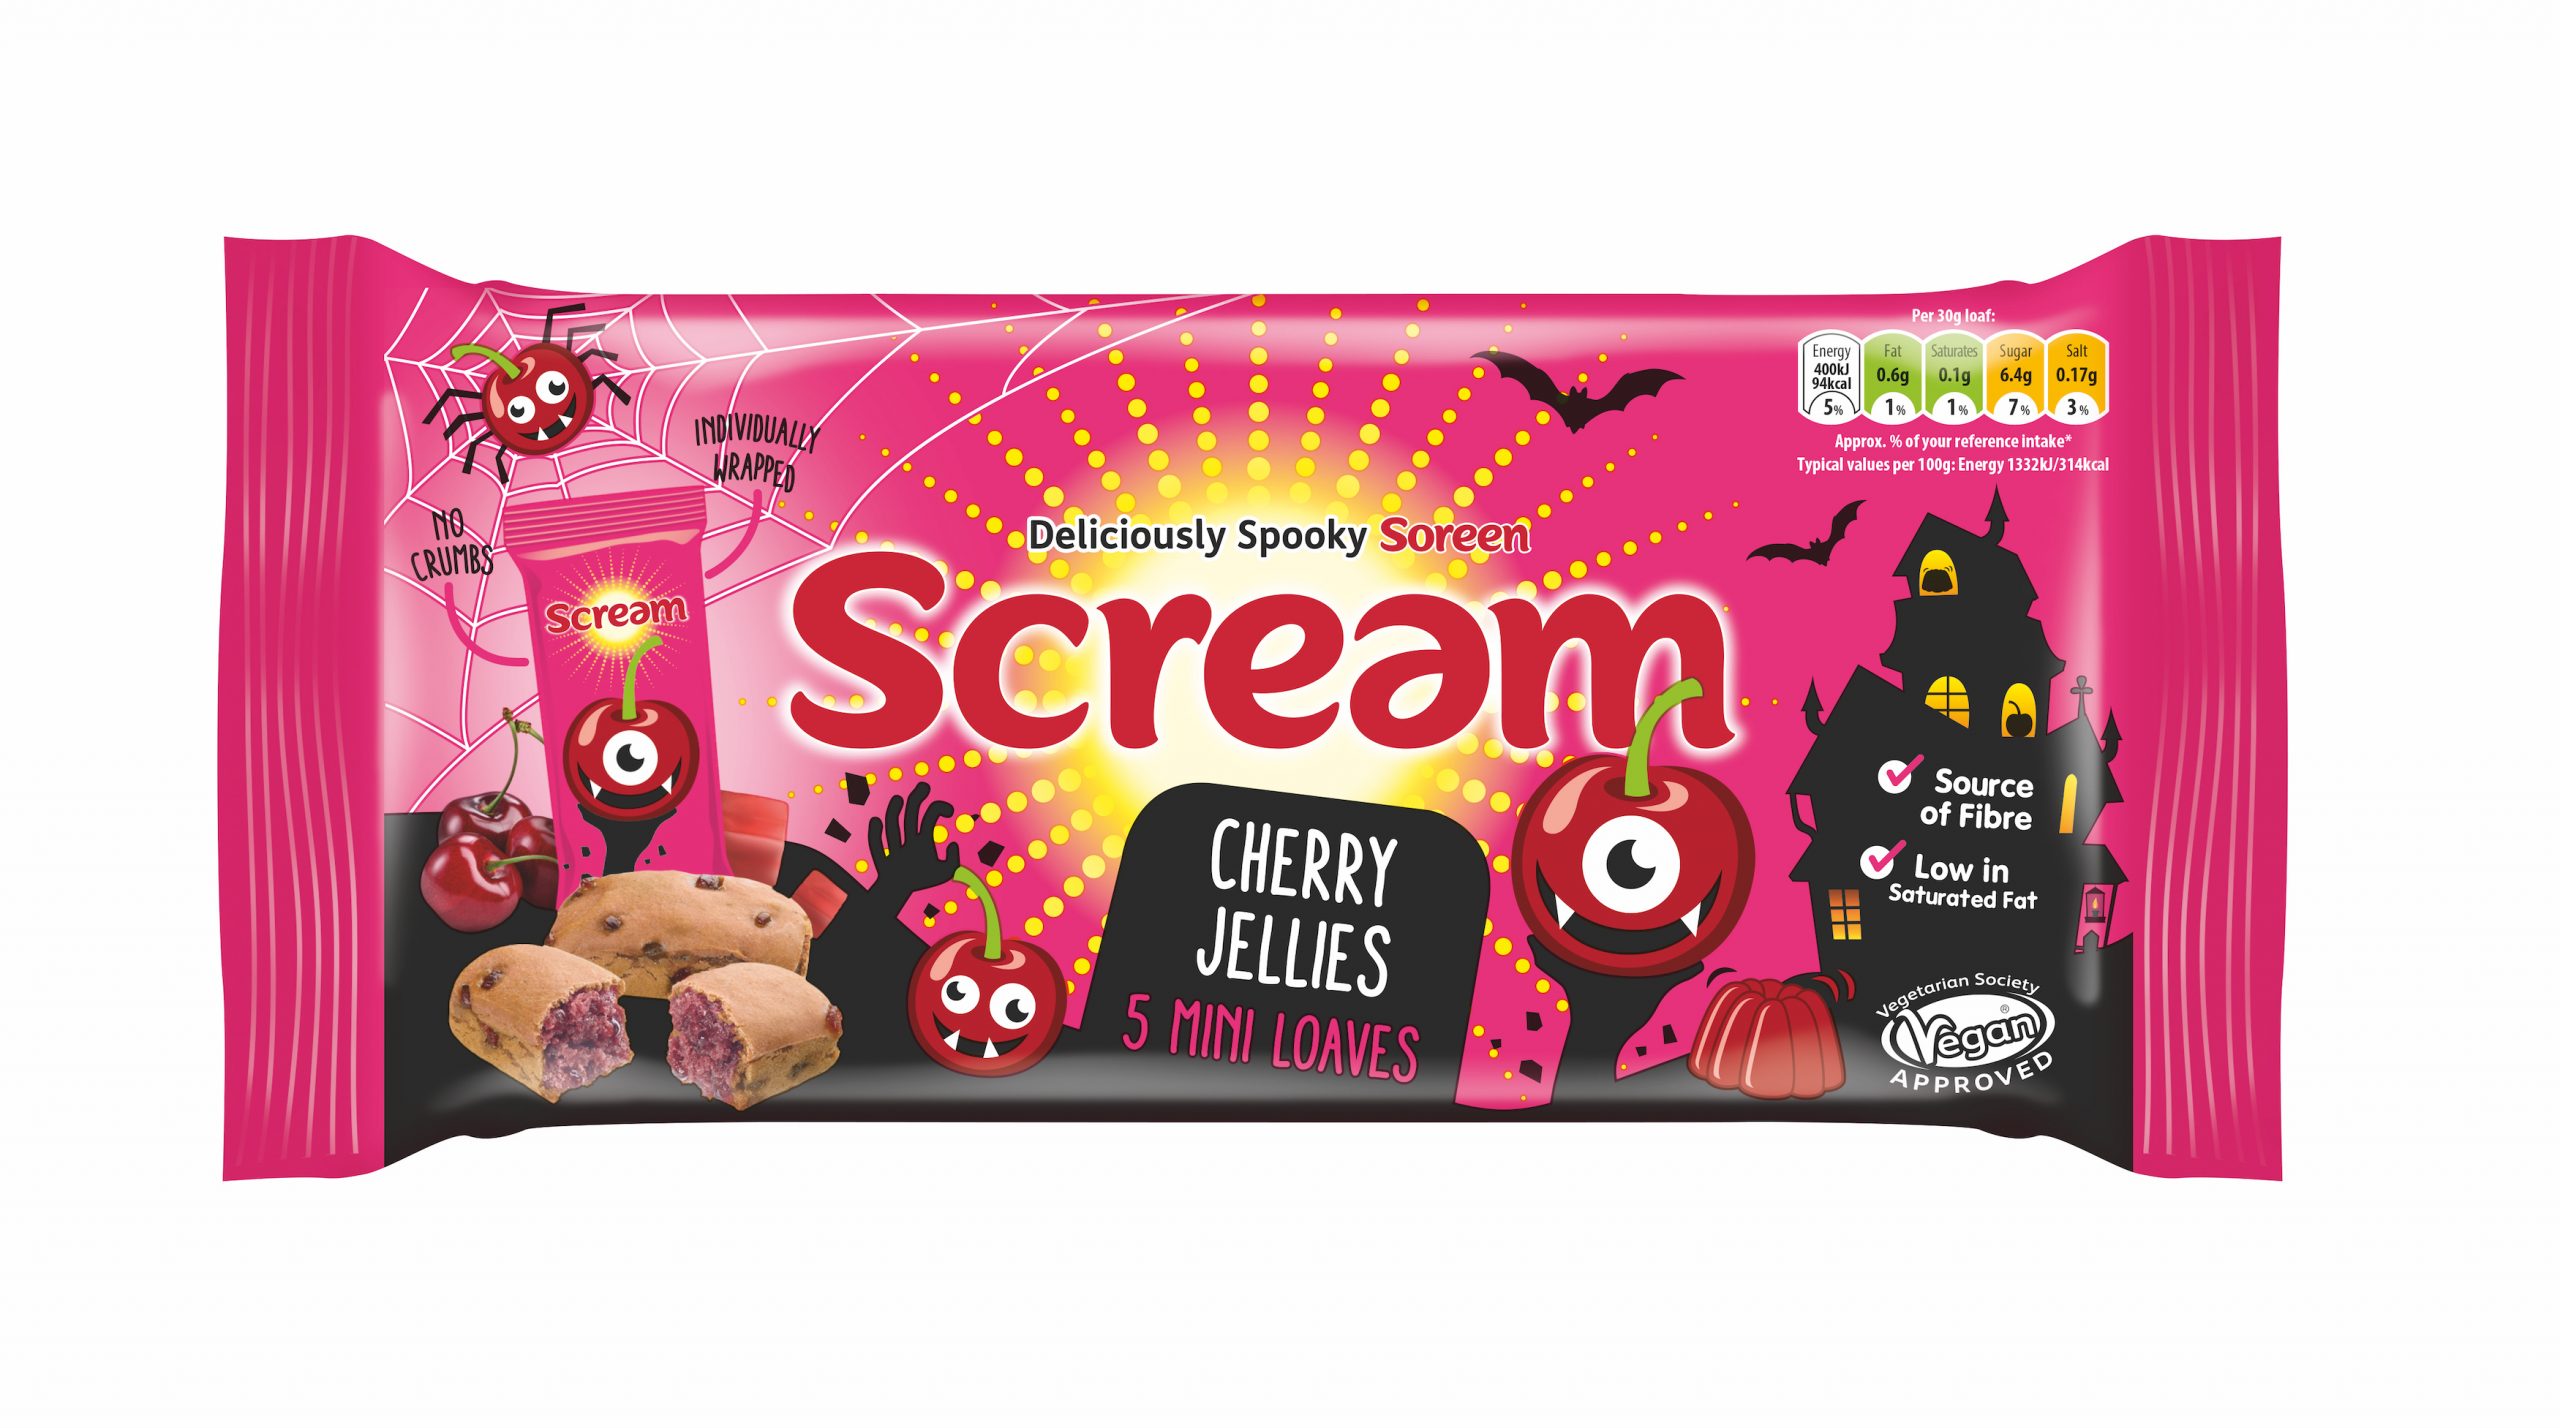 Soreen launches new Cherry-fying Jellies for Hallowe’en